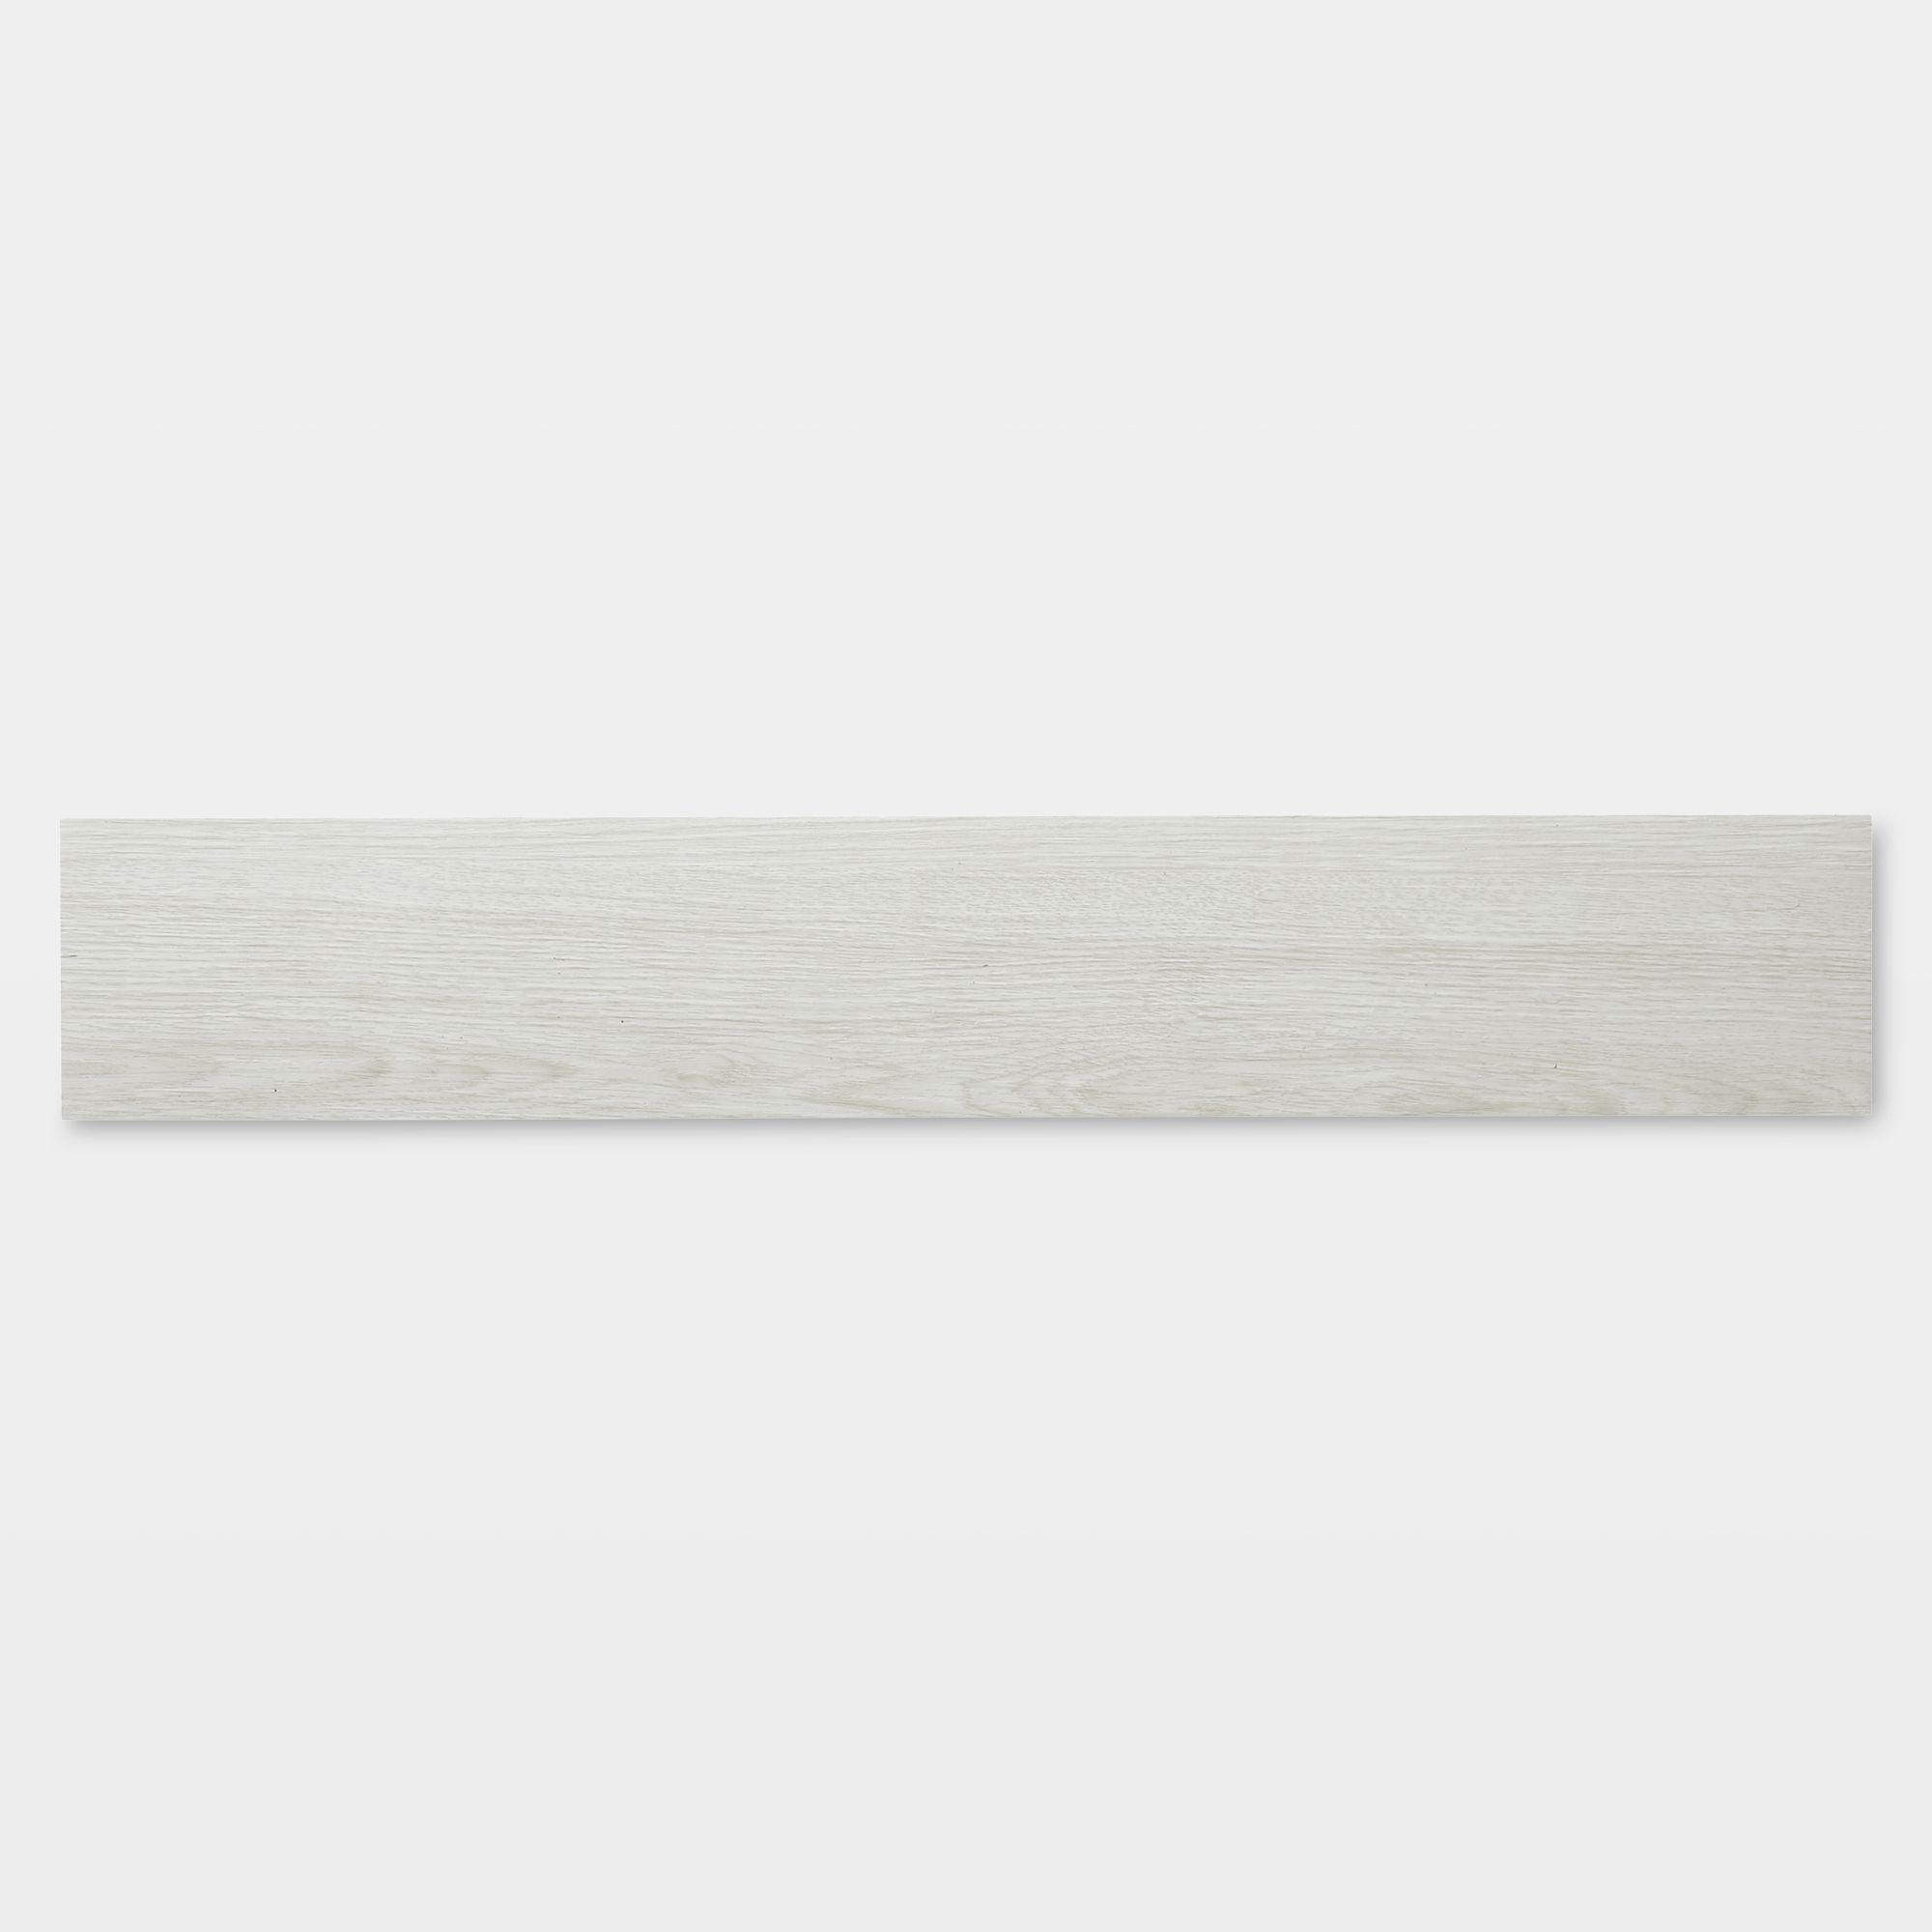 GoodHome Poprock White Wood planks Wood effect Self-adhesive Vinyl plank, Pack of 20